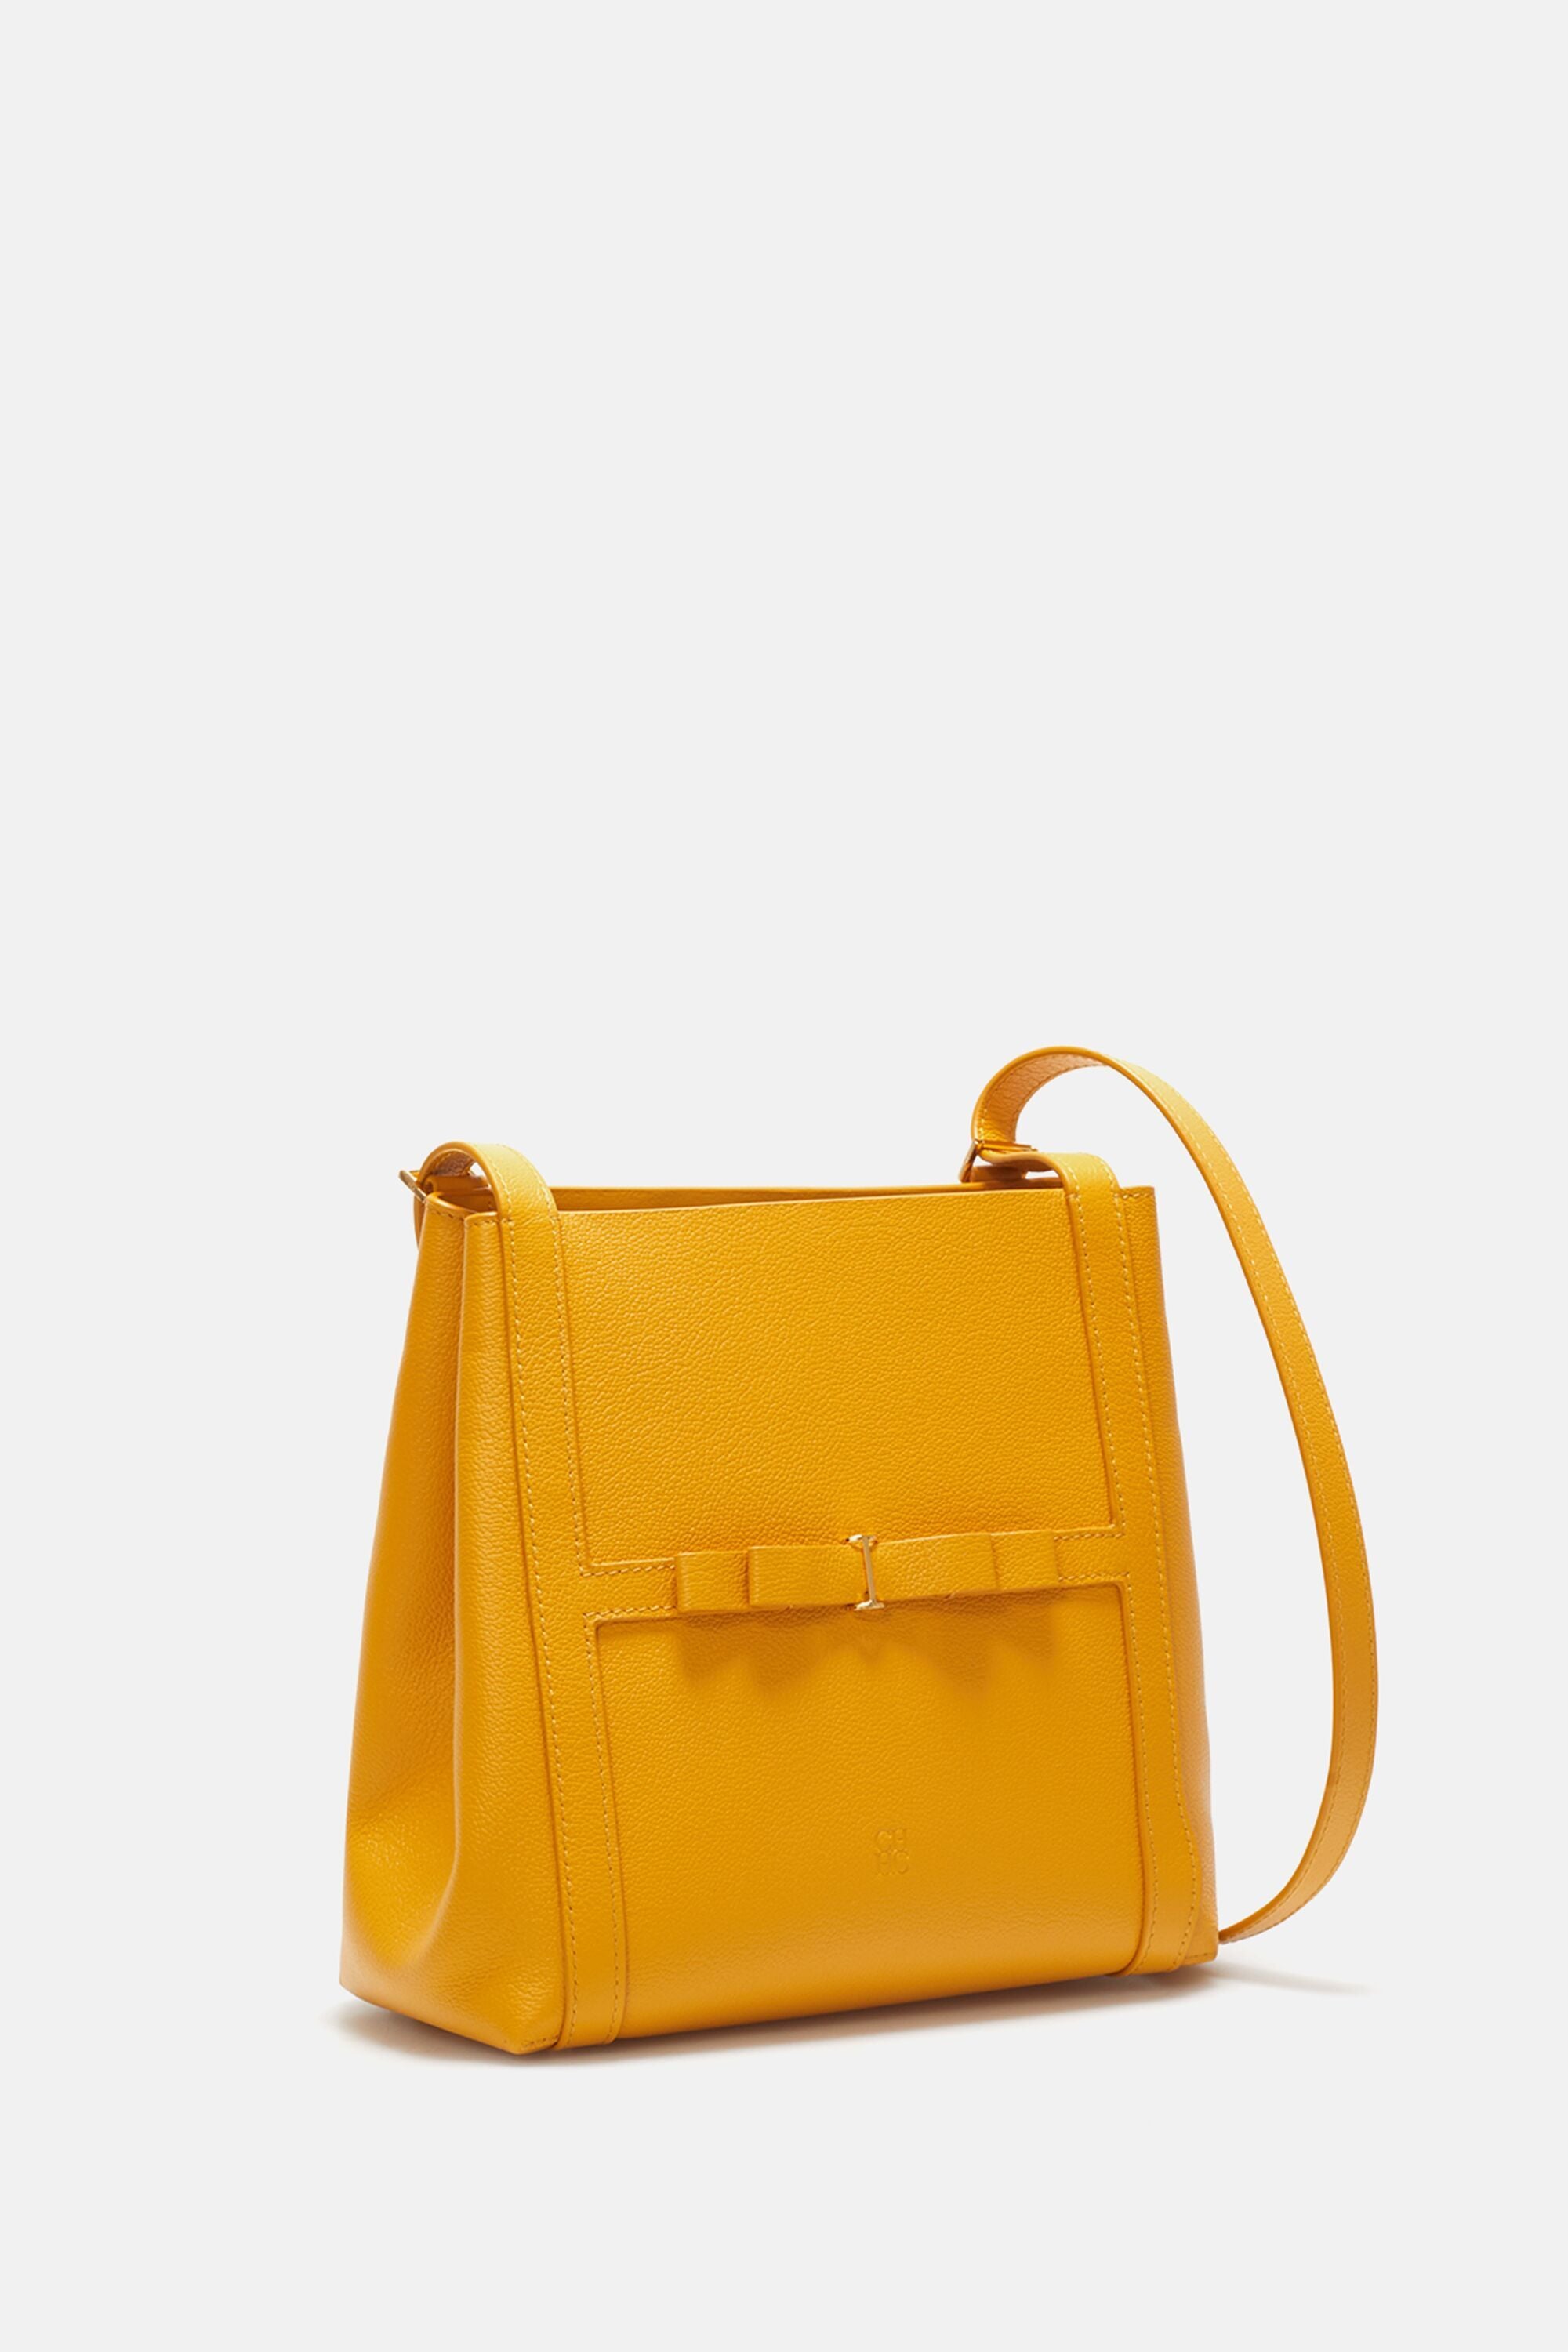 ZARA Yellow Shoulder Bags